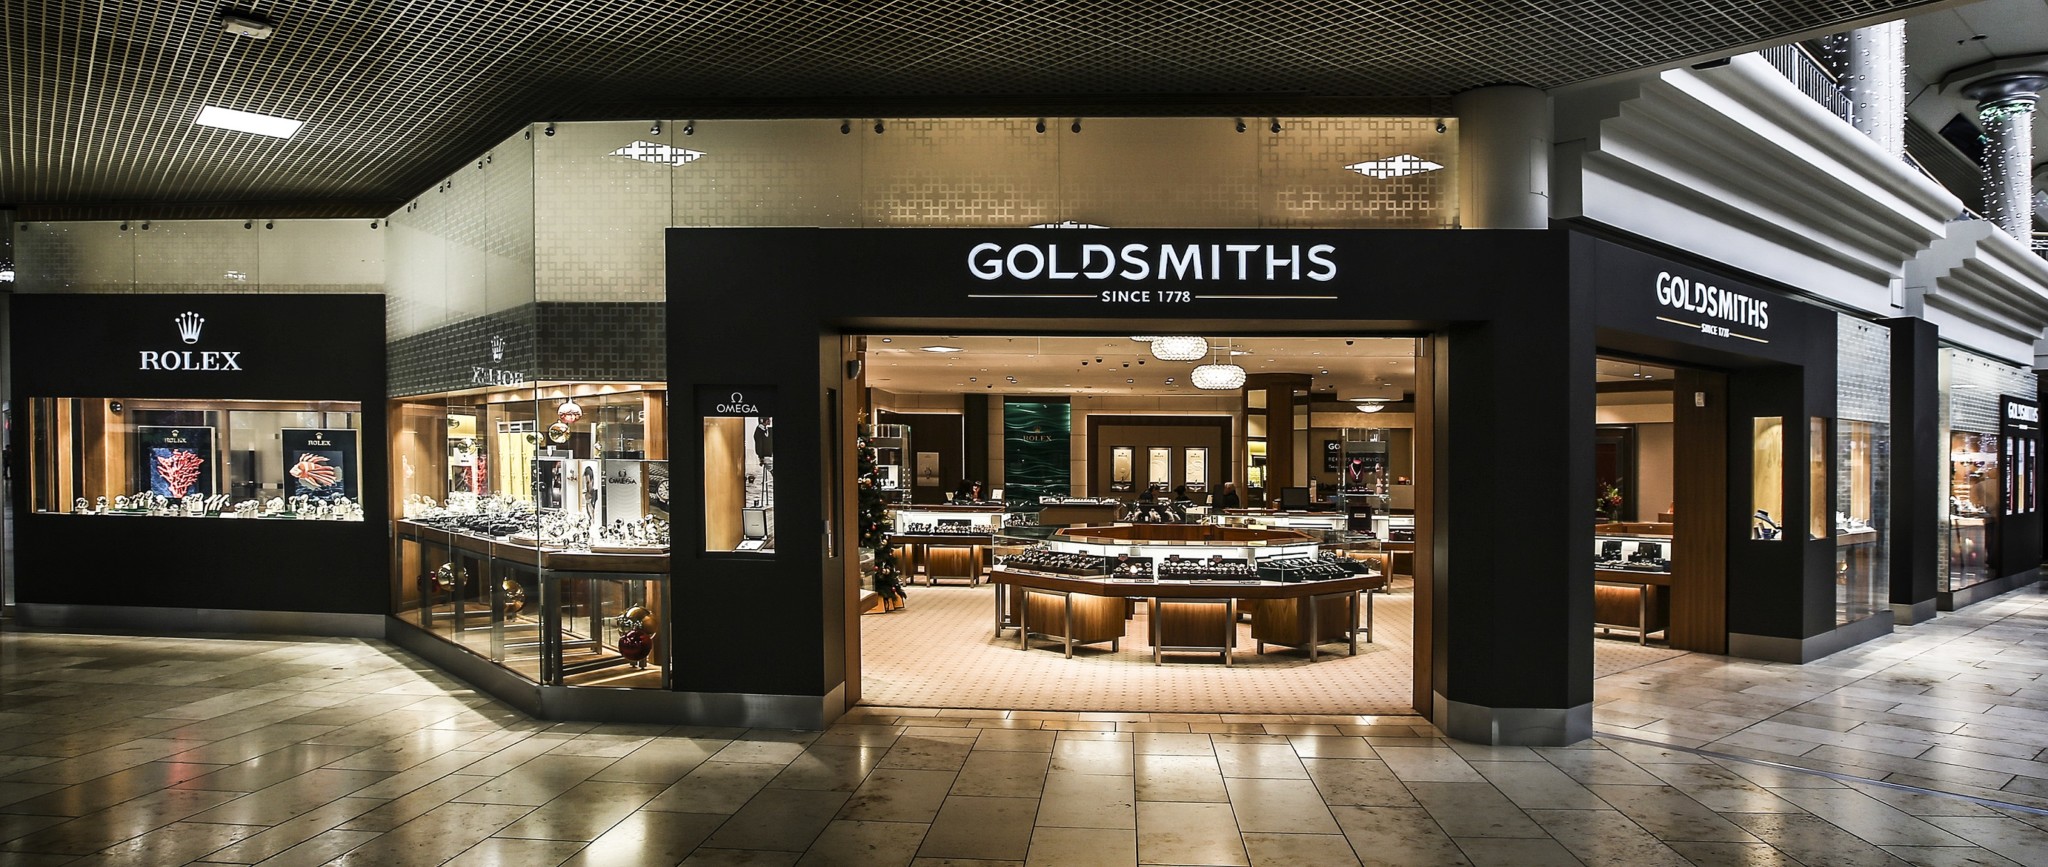 Goldsmiths new intu metrocentre showroom (2)